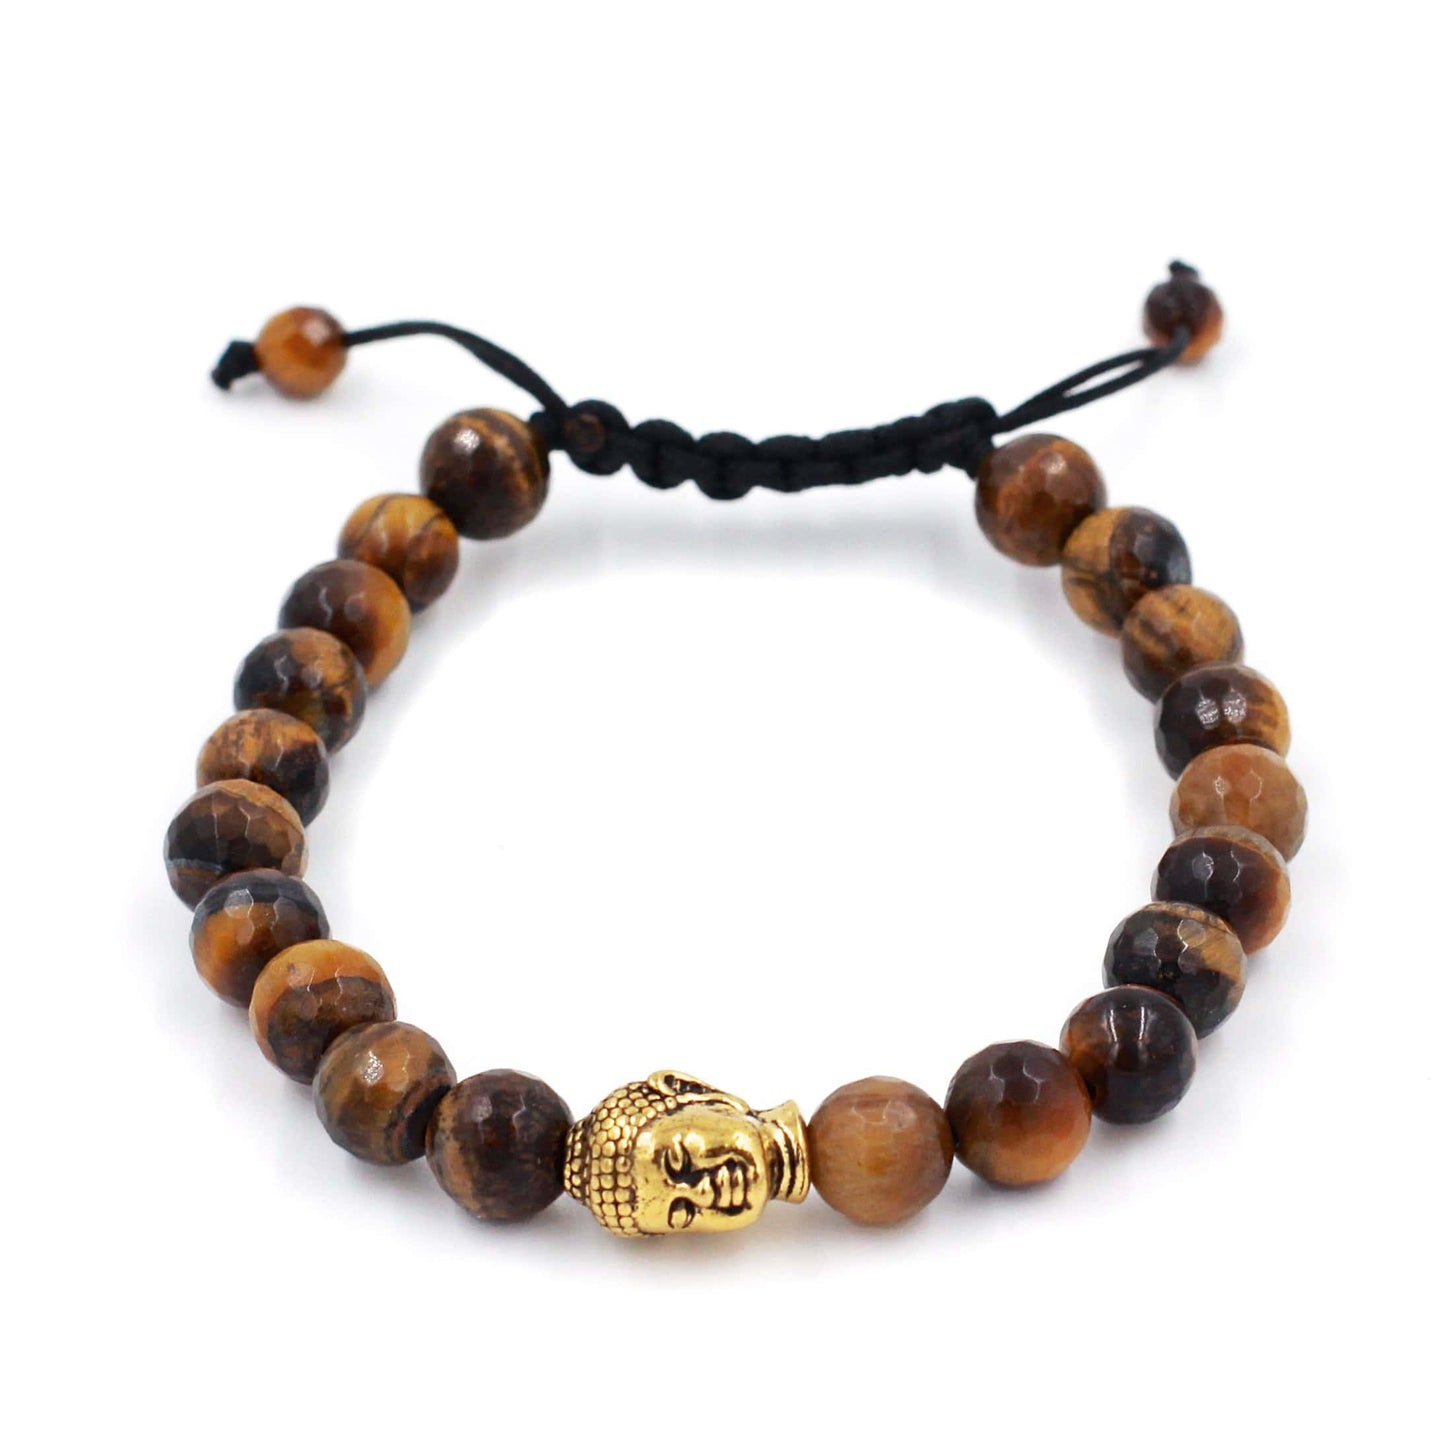 Tigers Eye custom stone bracelet with Gold Buddha Head charm.